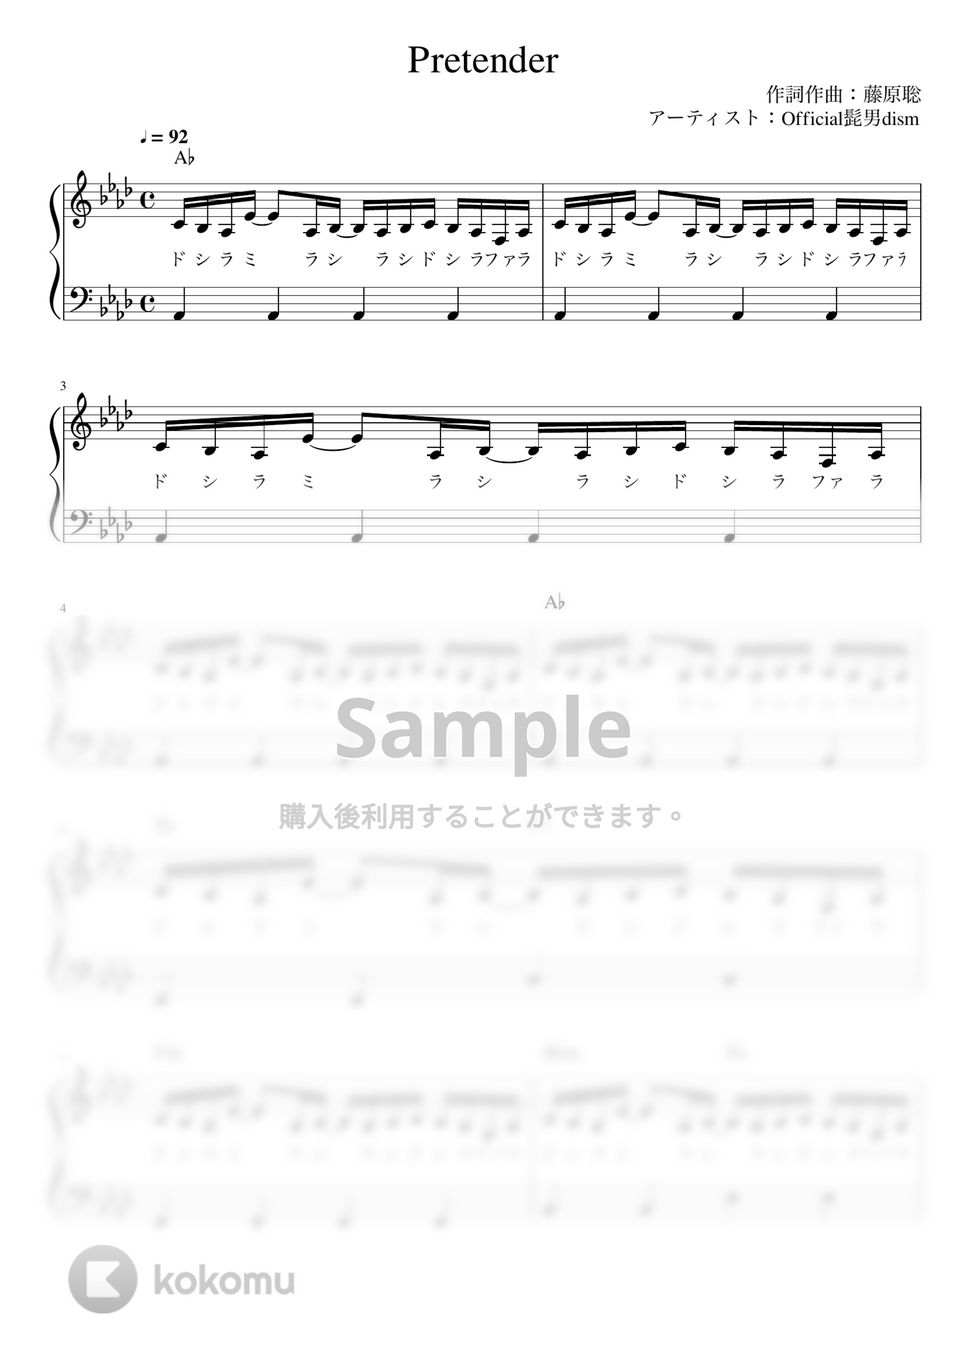 Pretender ピアノソロ 楽譜 初心者 Official髭男dism - 2